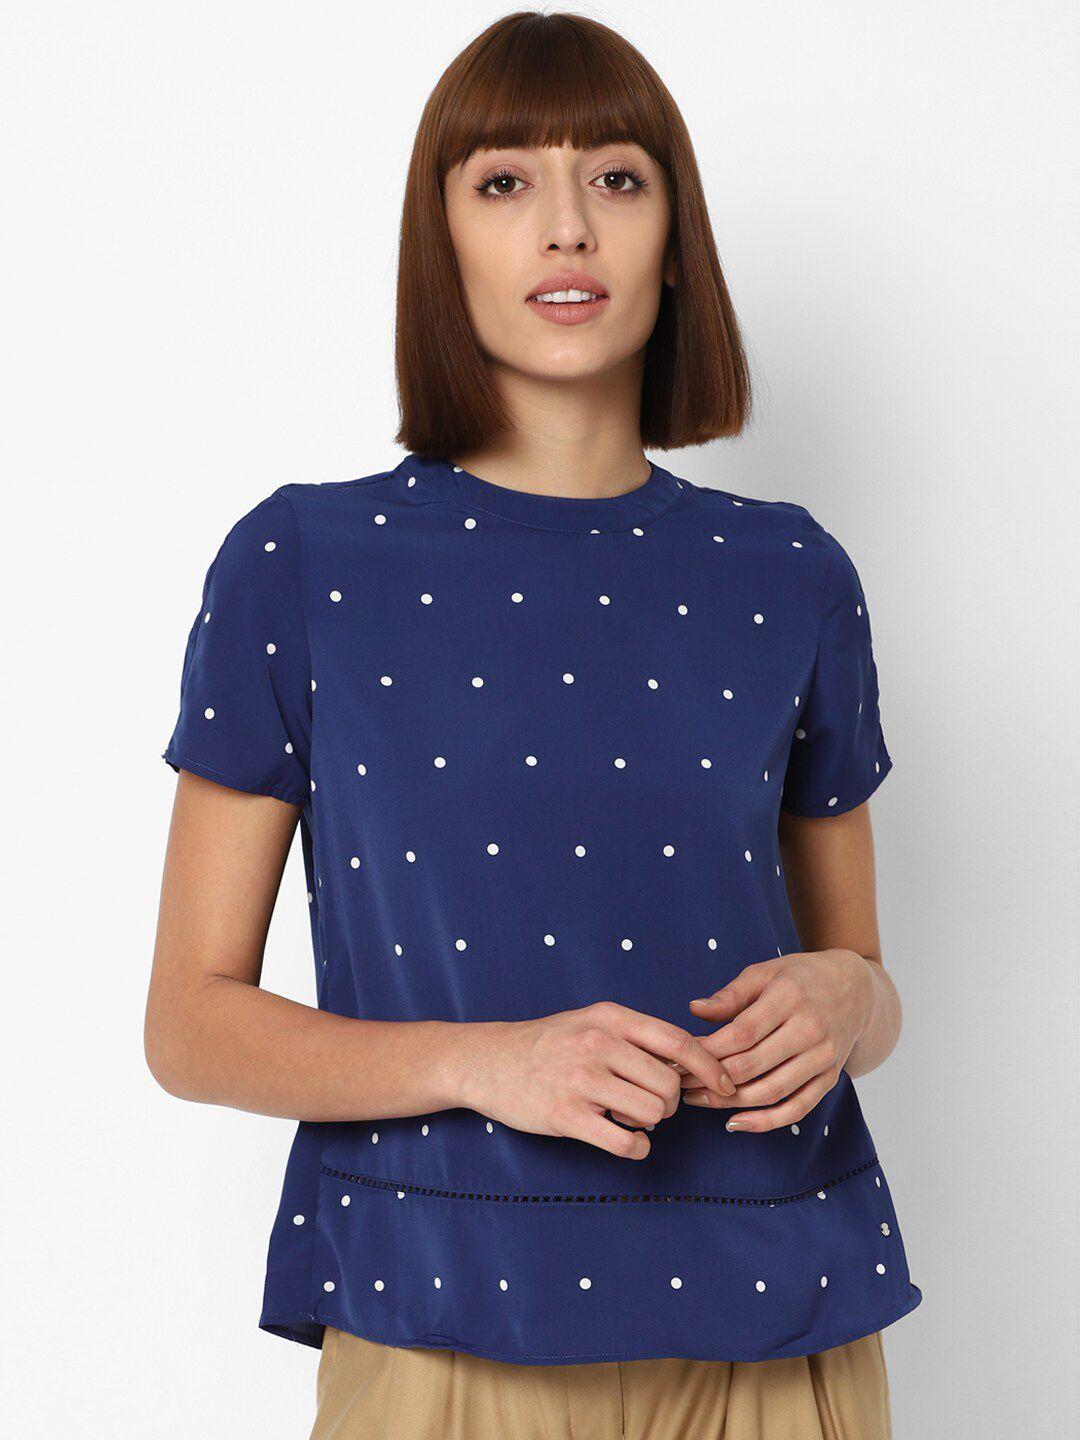 allen solly woman navy blue & white polka dots printed regular top